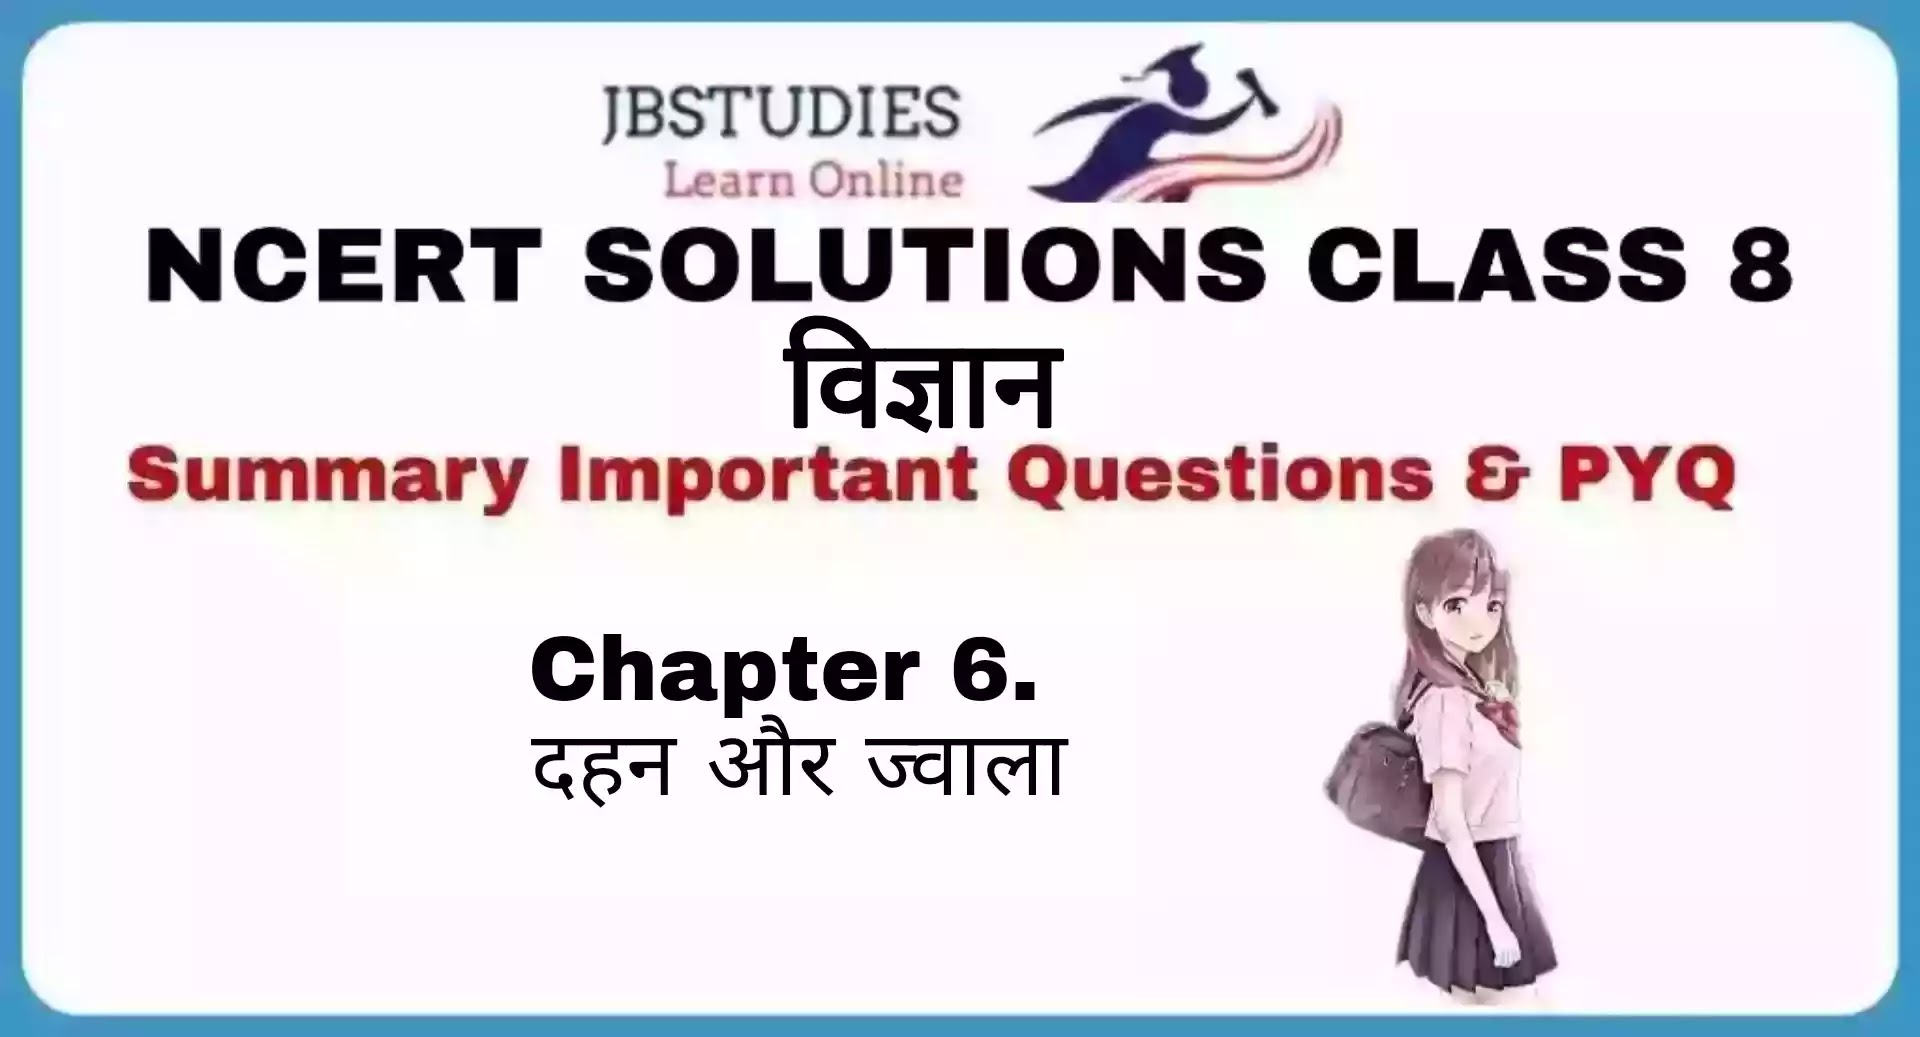 Solutions Class 8 विज्ञान Chapter- 6 (दहन और ज्वाला)